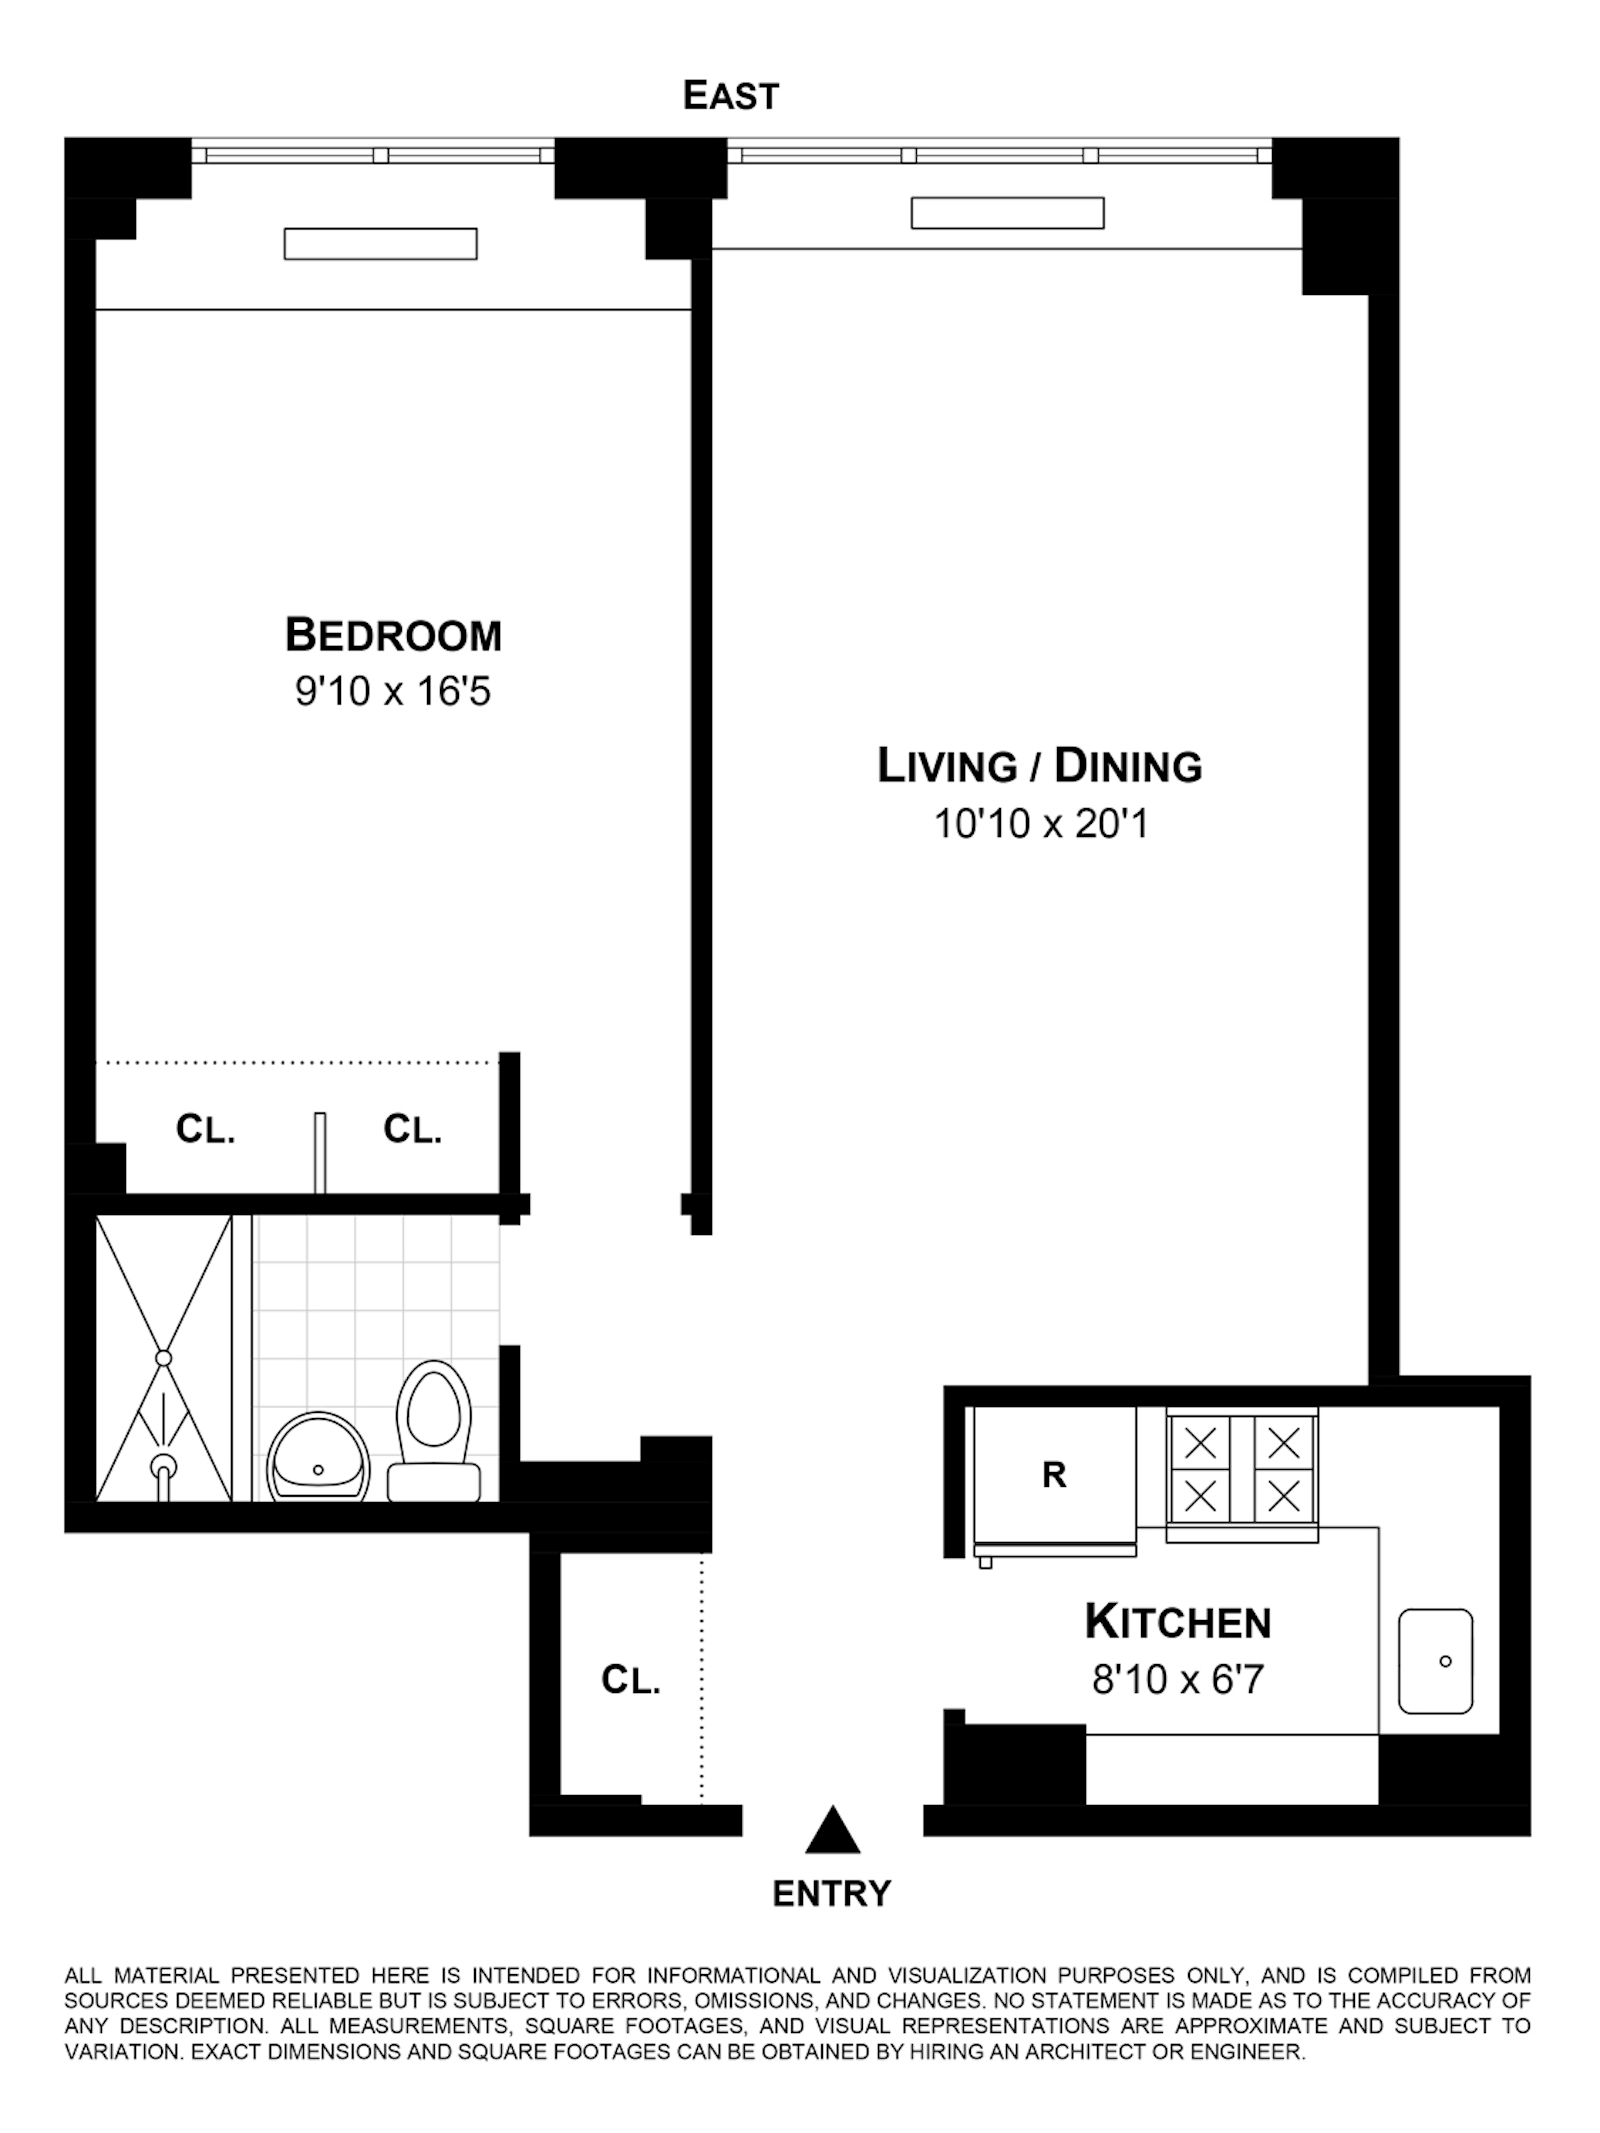 Floorplan for 301 East 22nd Street, 10S